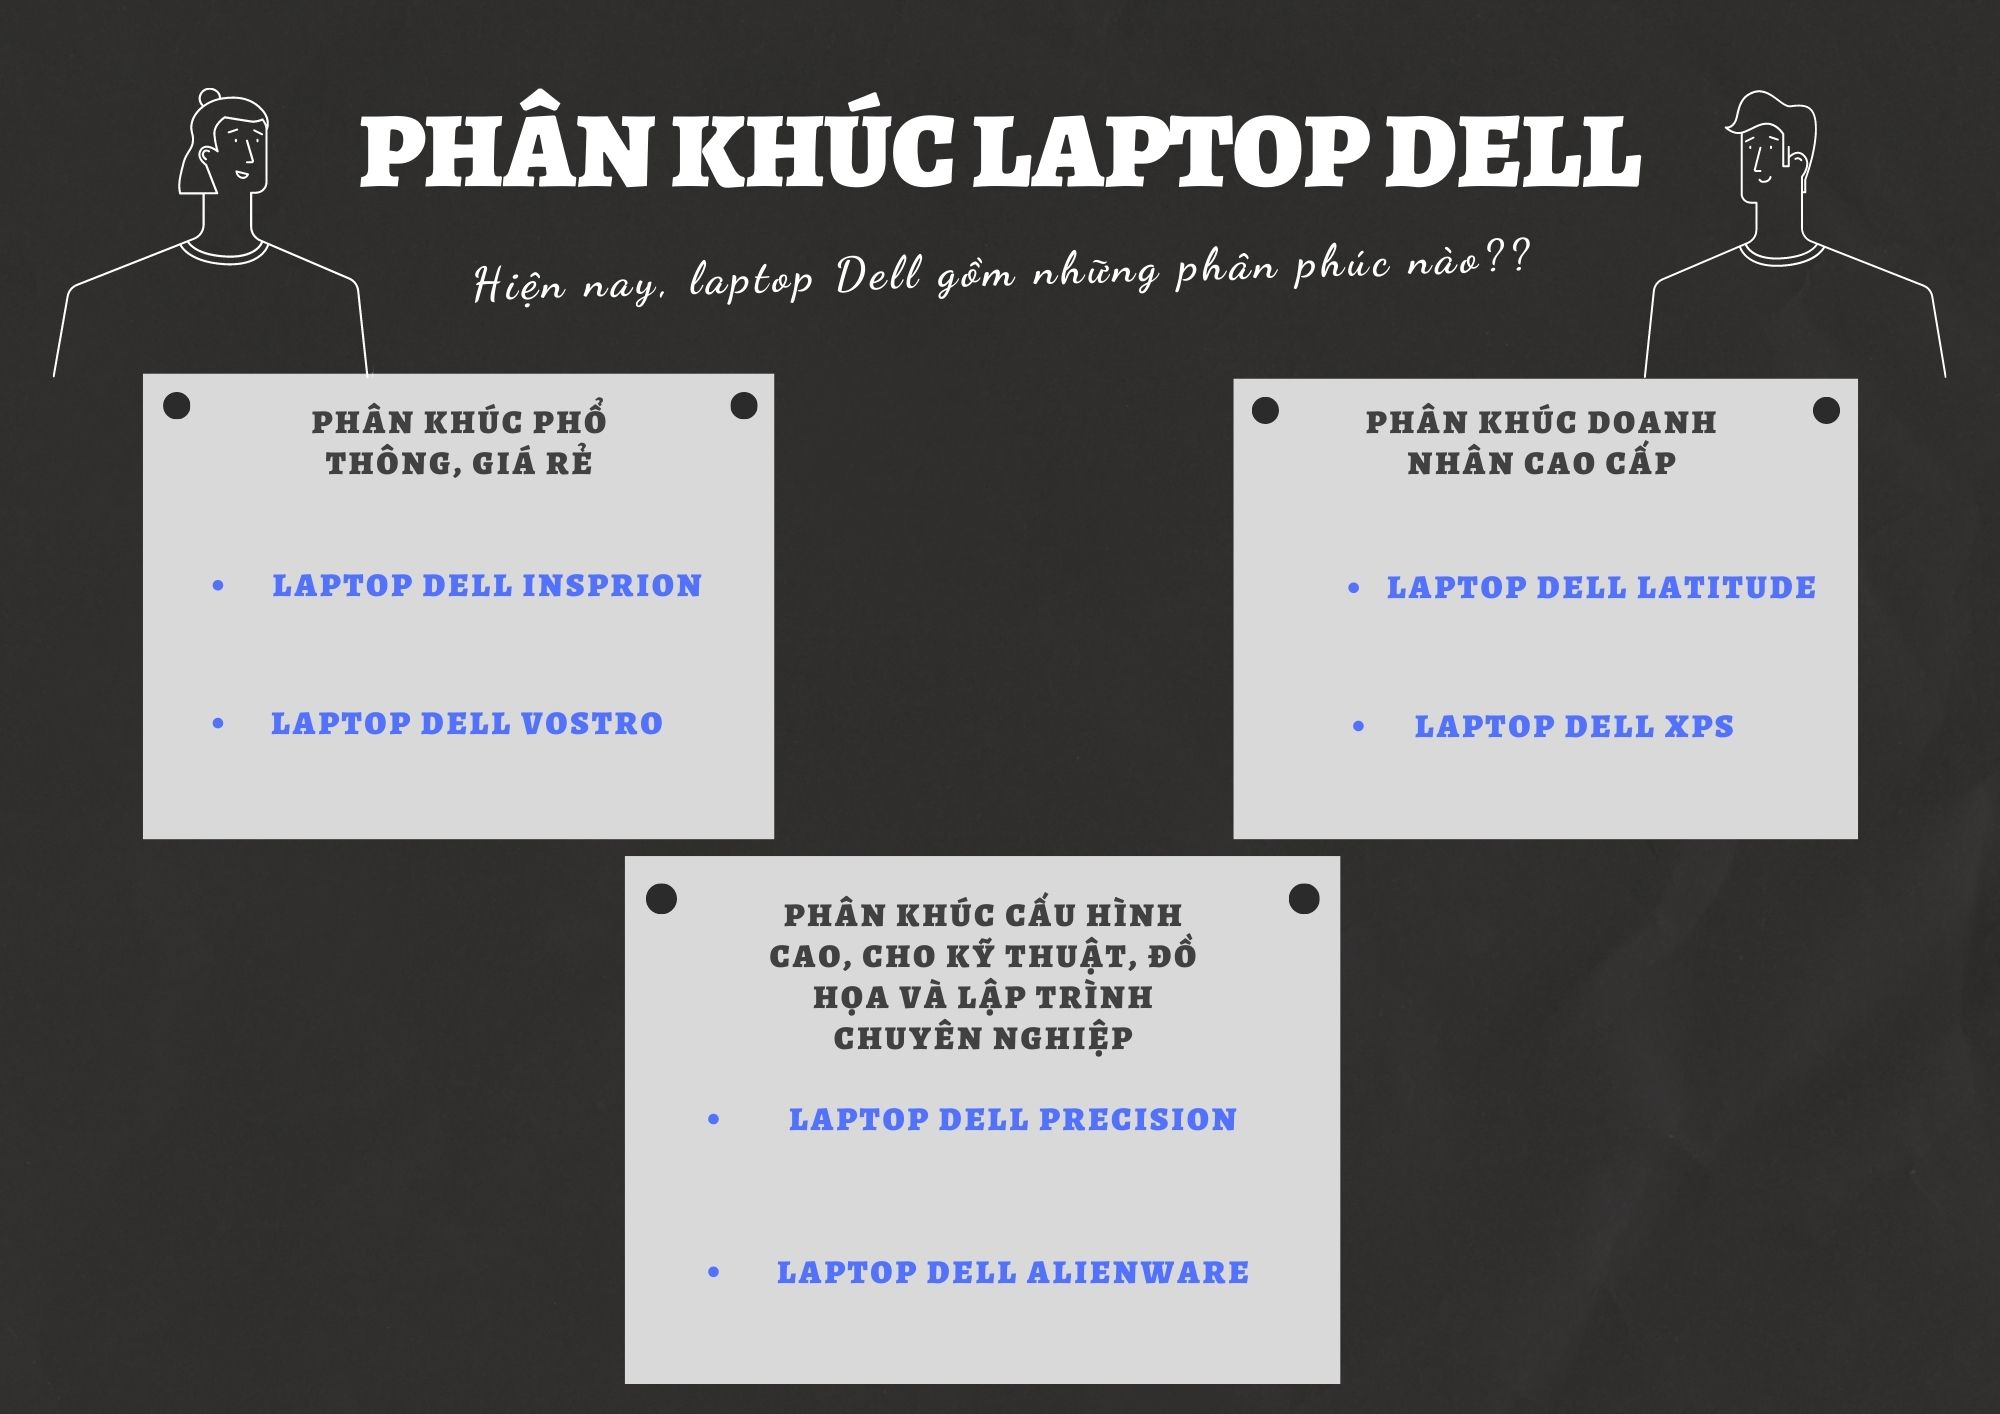 phan-khuc-laptop-dell-va-goi-y-lua-chon-tren-thi-truong-hien-nay